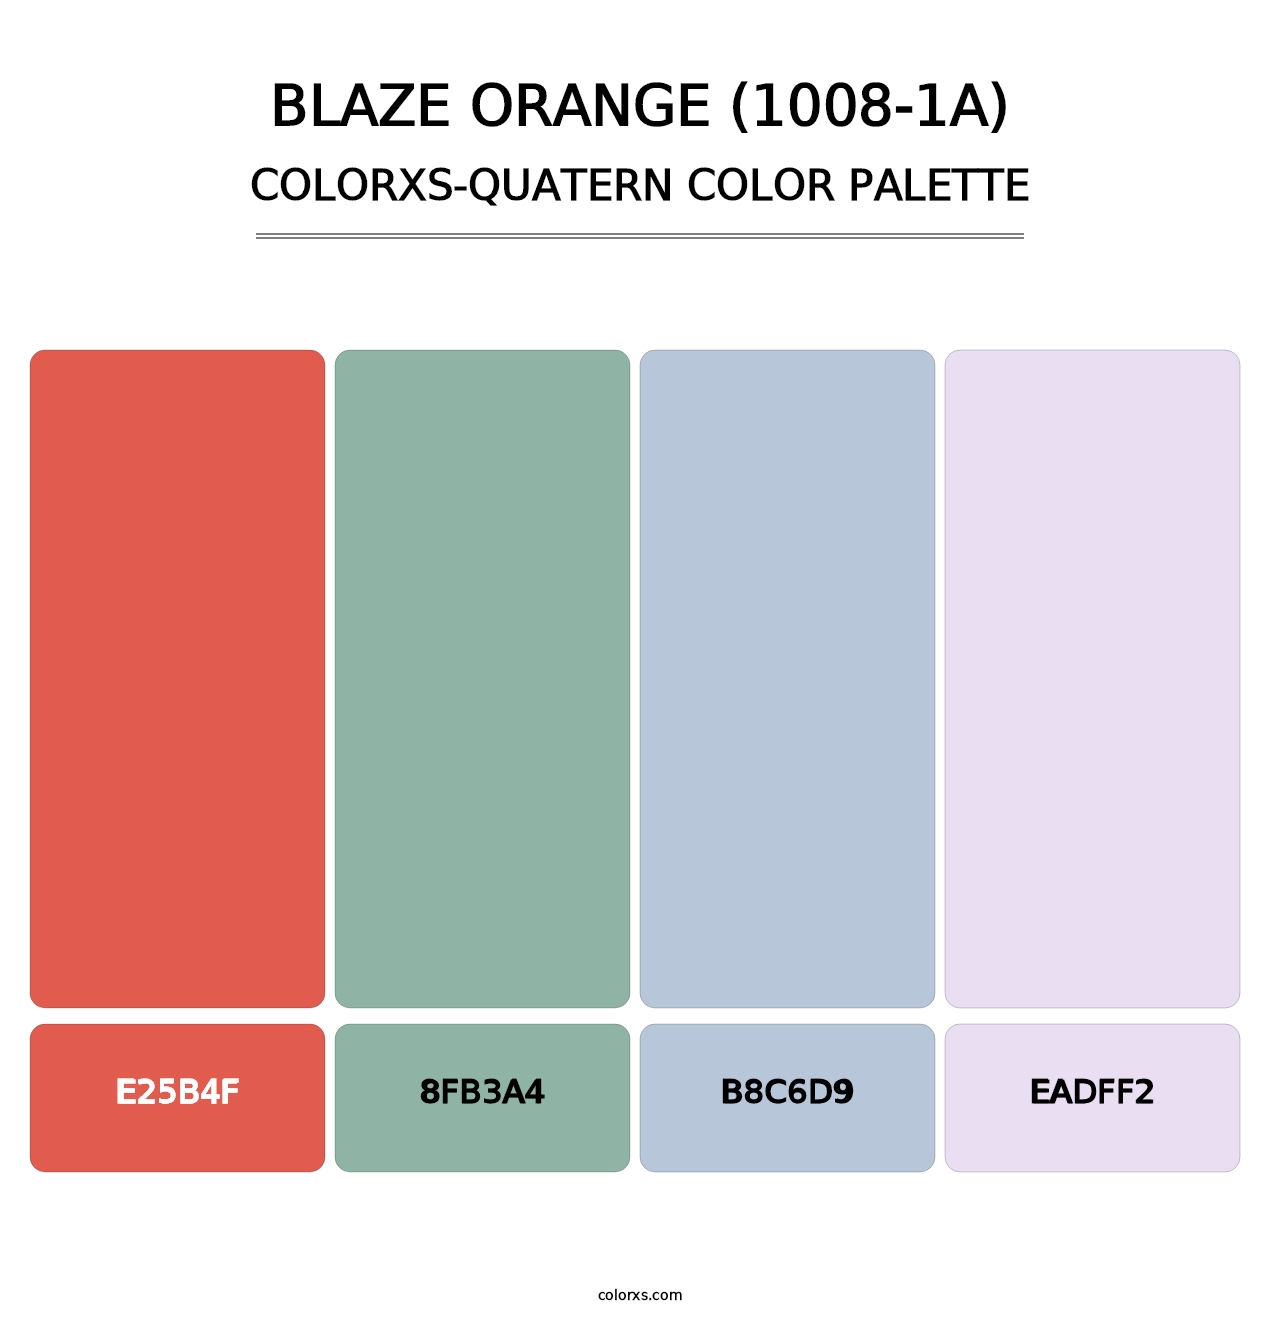 Blaze Orange (1008-1A) - Colorxs Quatern Palette